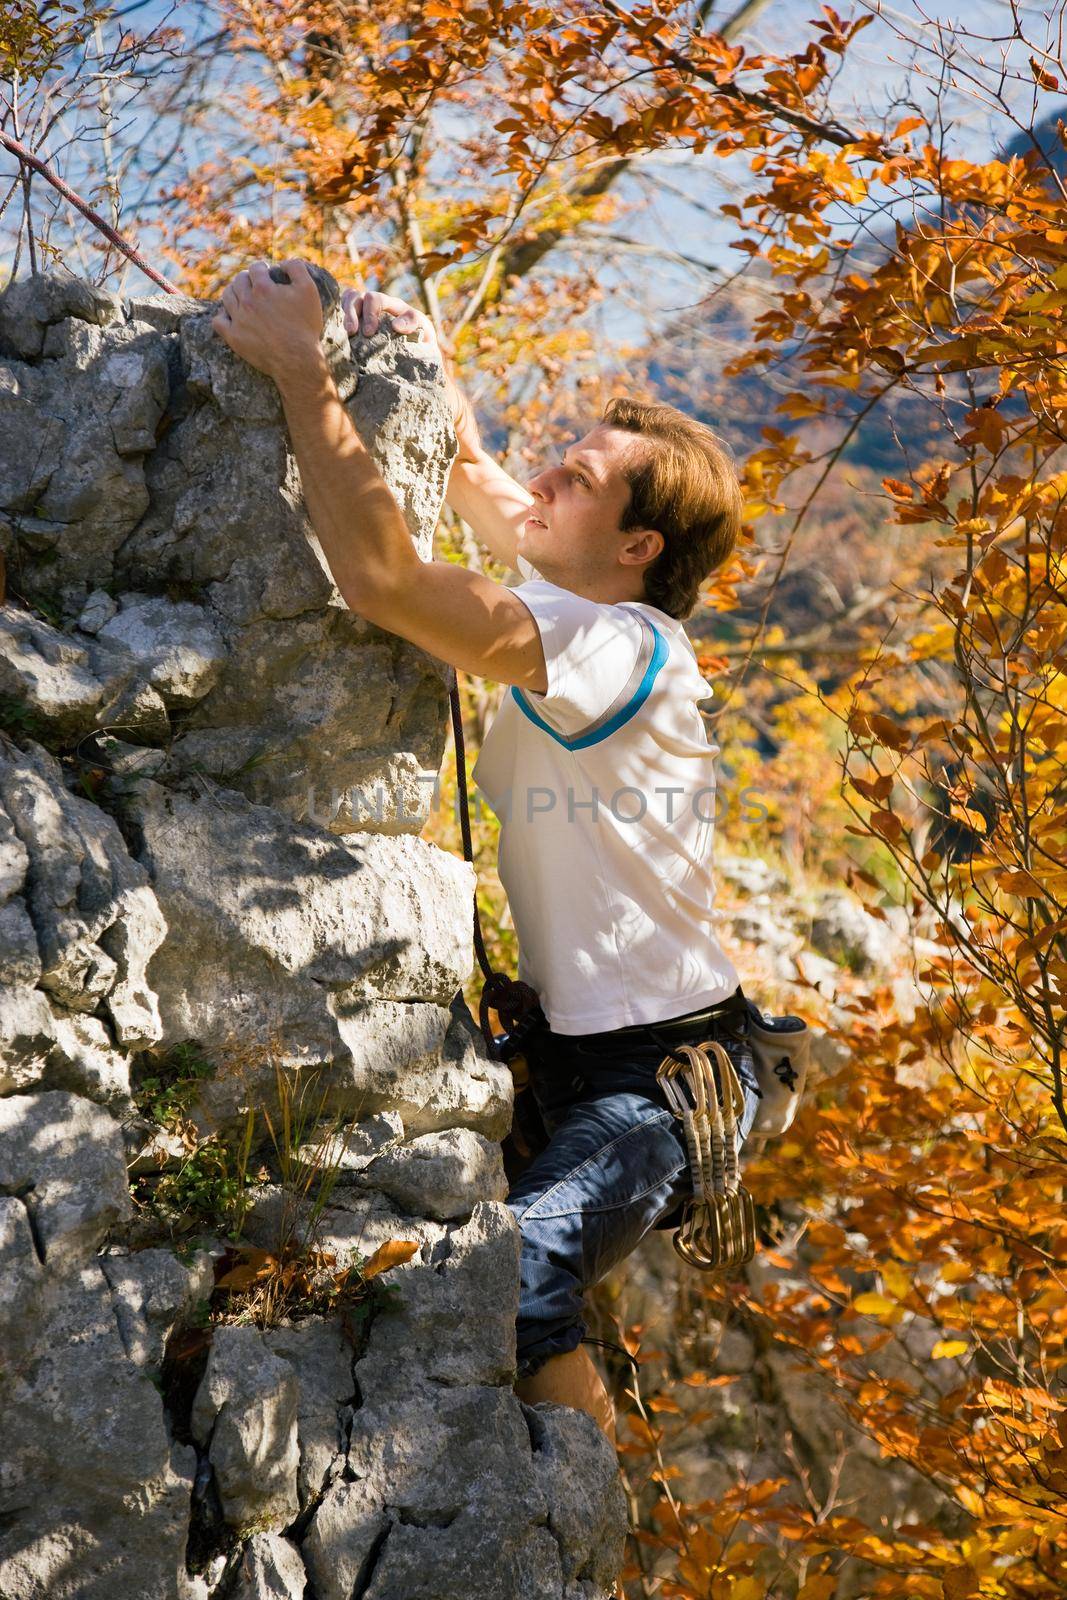 Rock Climbing by Kzenon